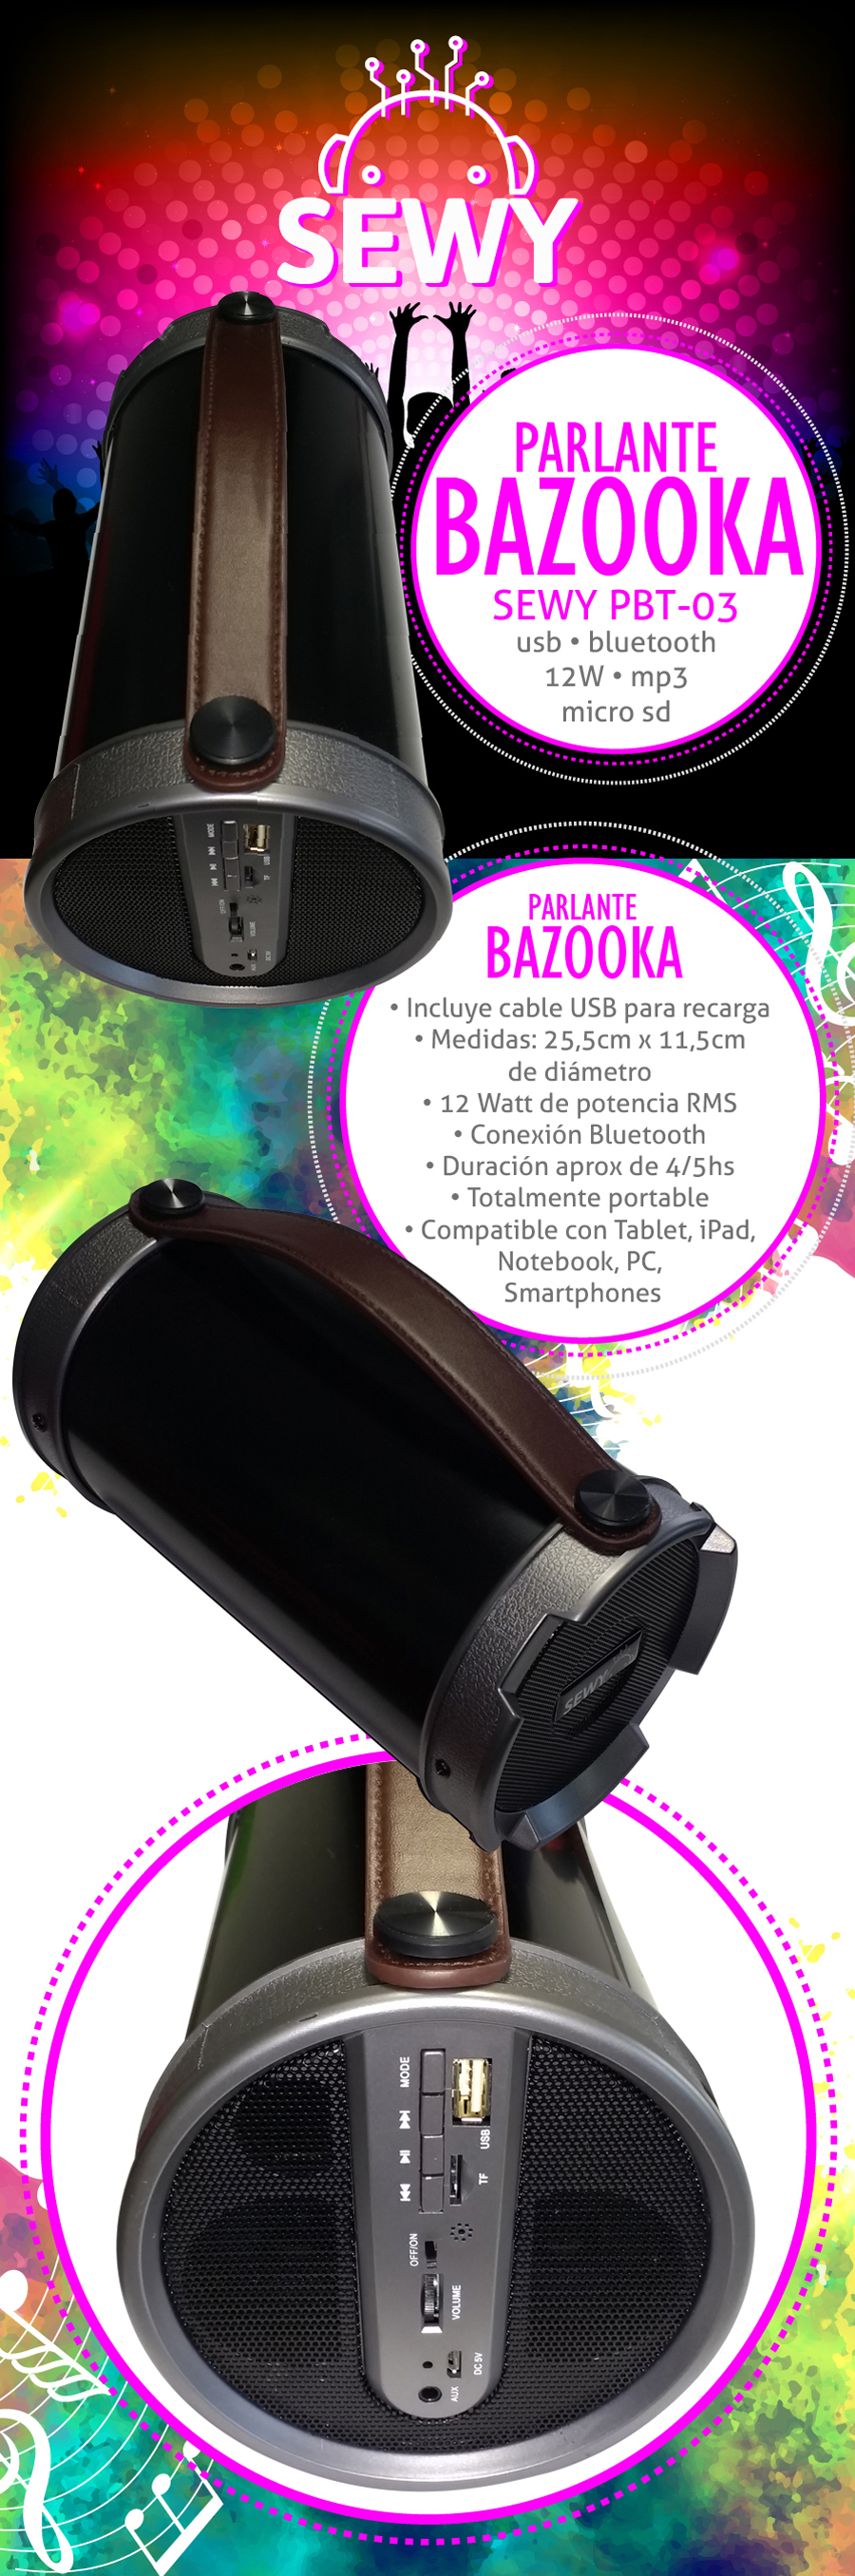 Parlante Bazooka Sewy PBT-03 12W USB MP3